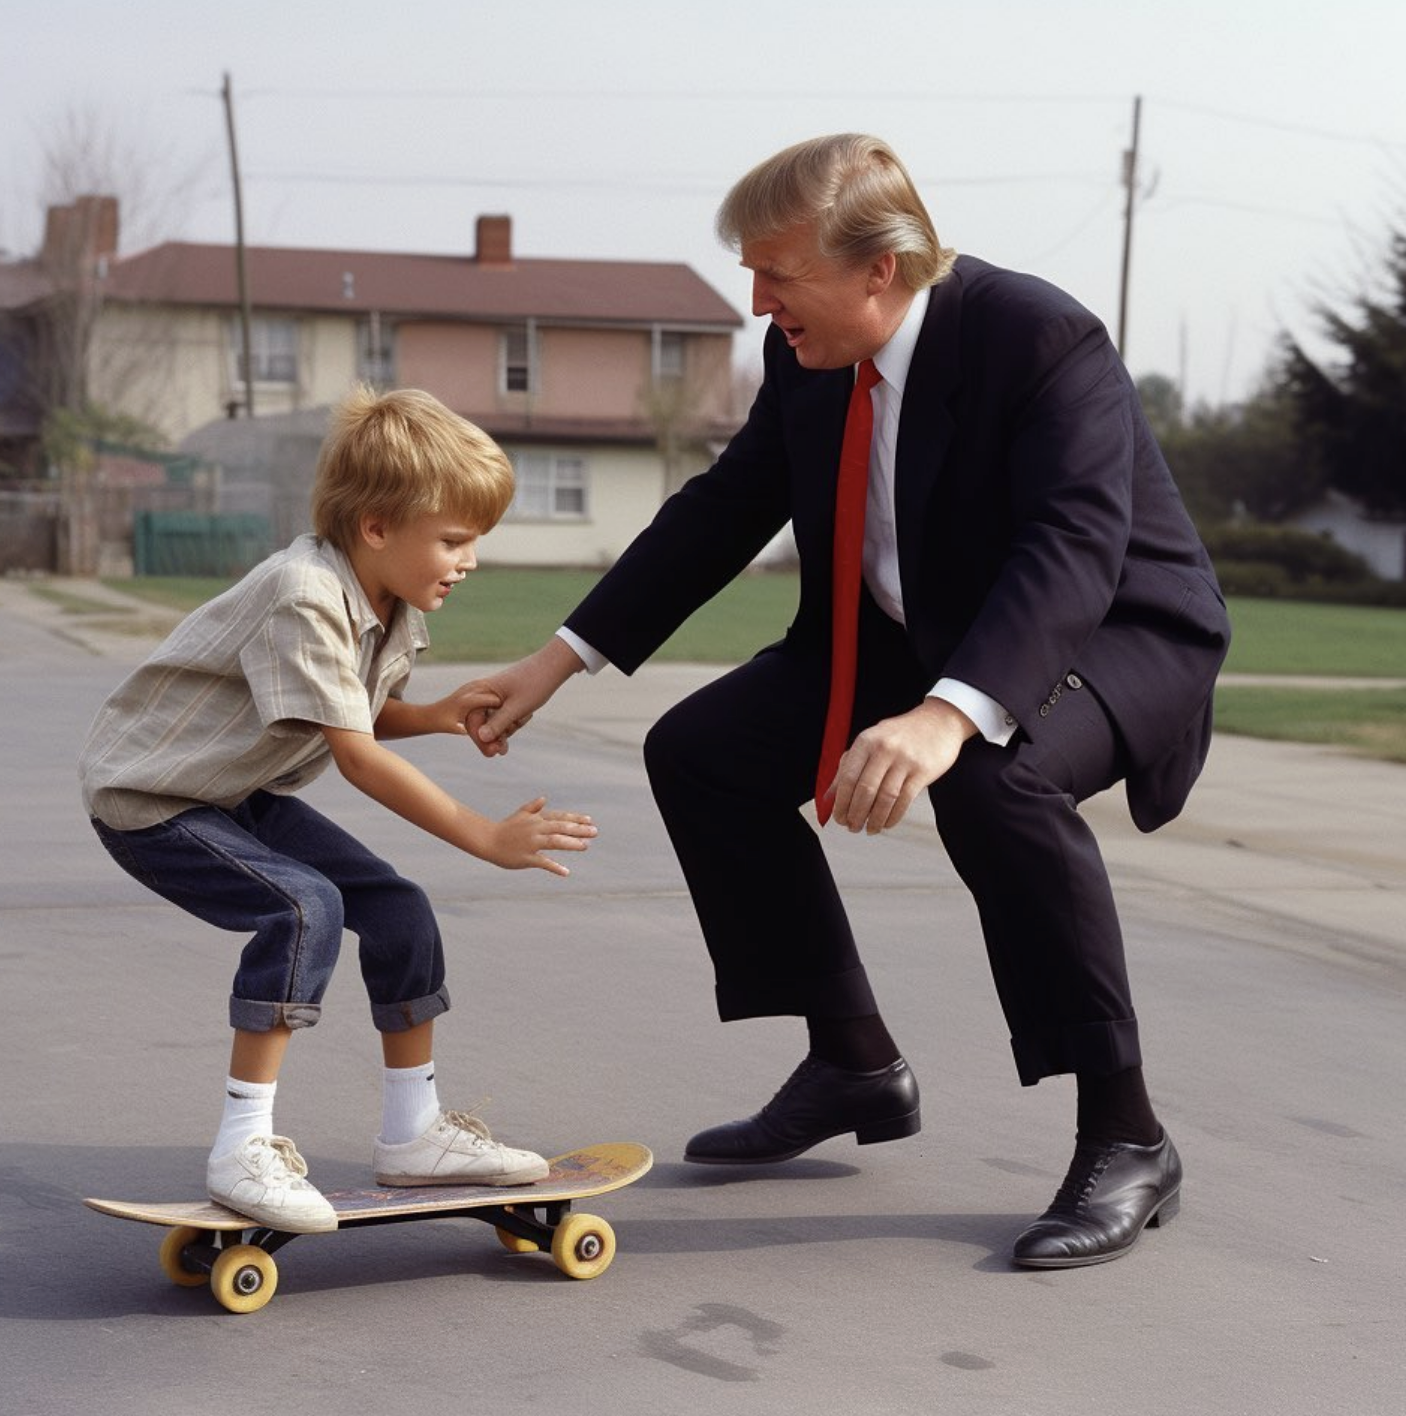 Trump skateboarding with young Tony Hawk